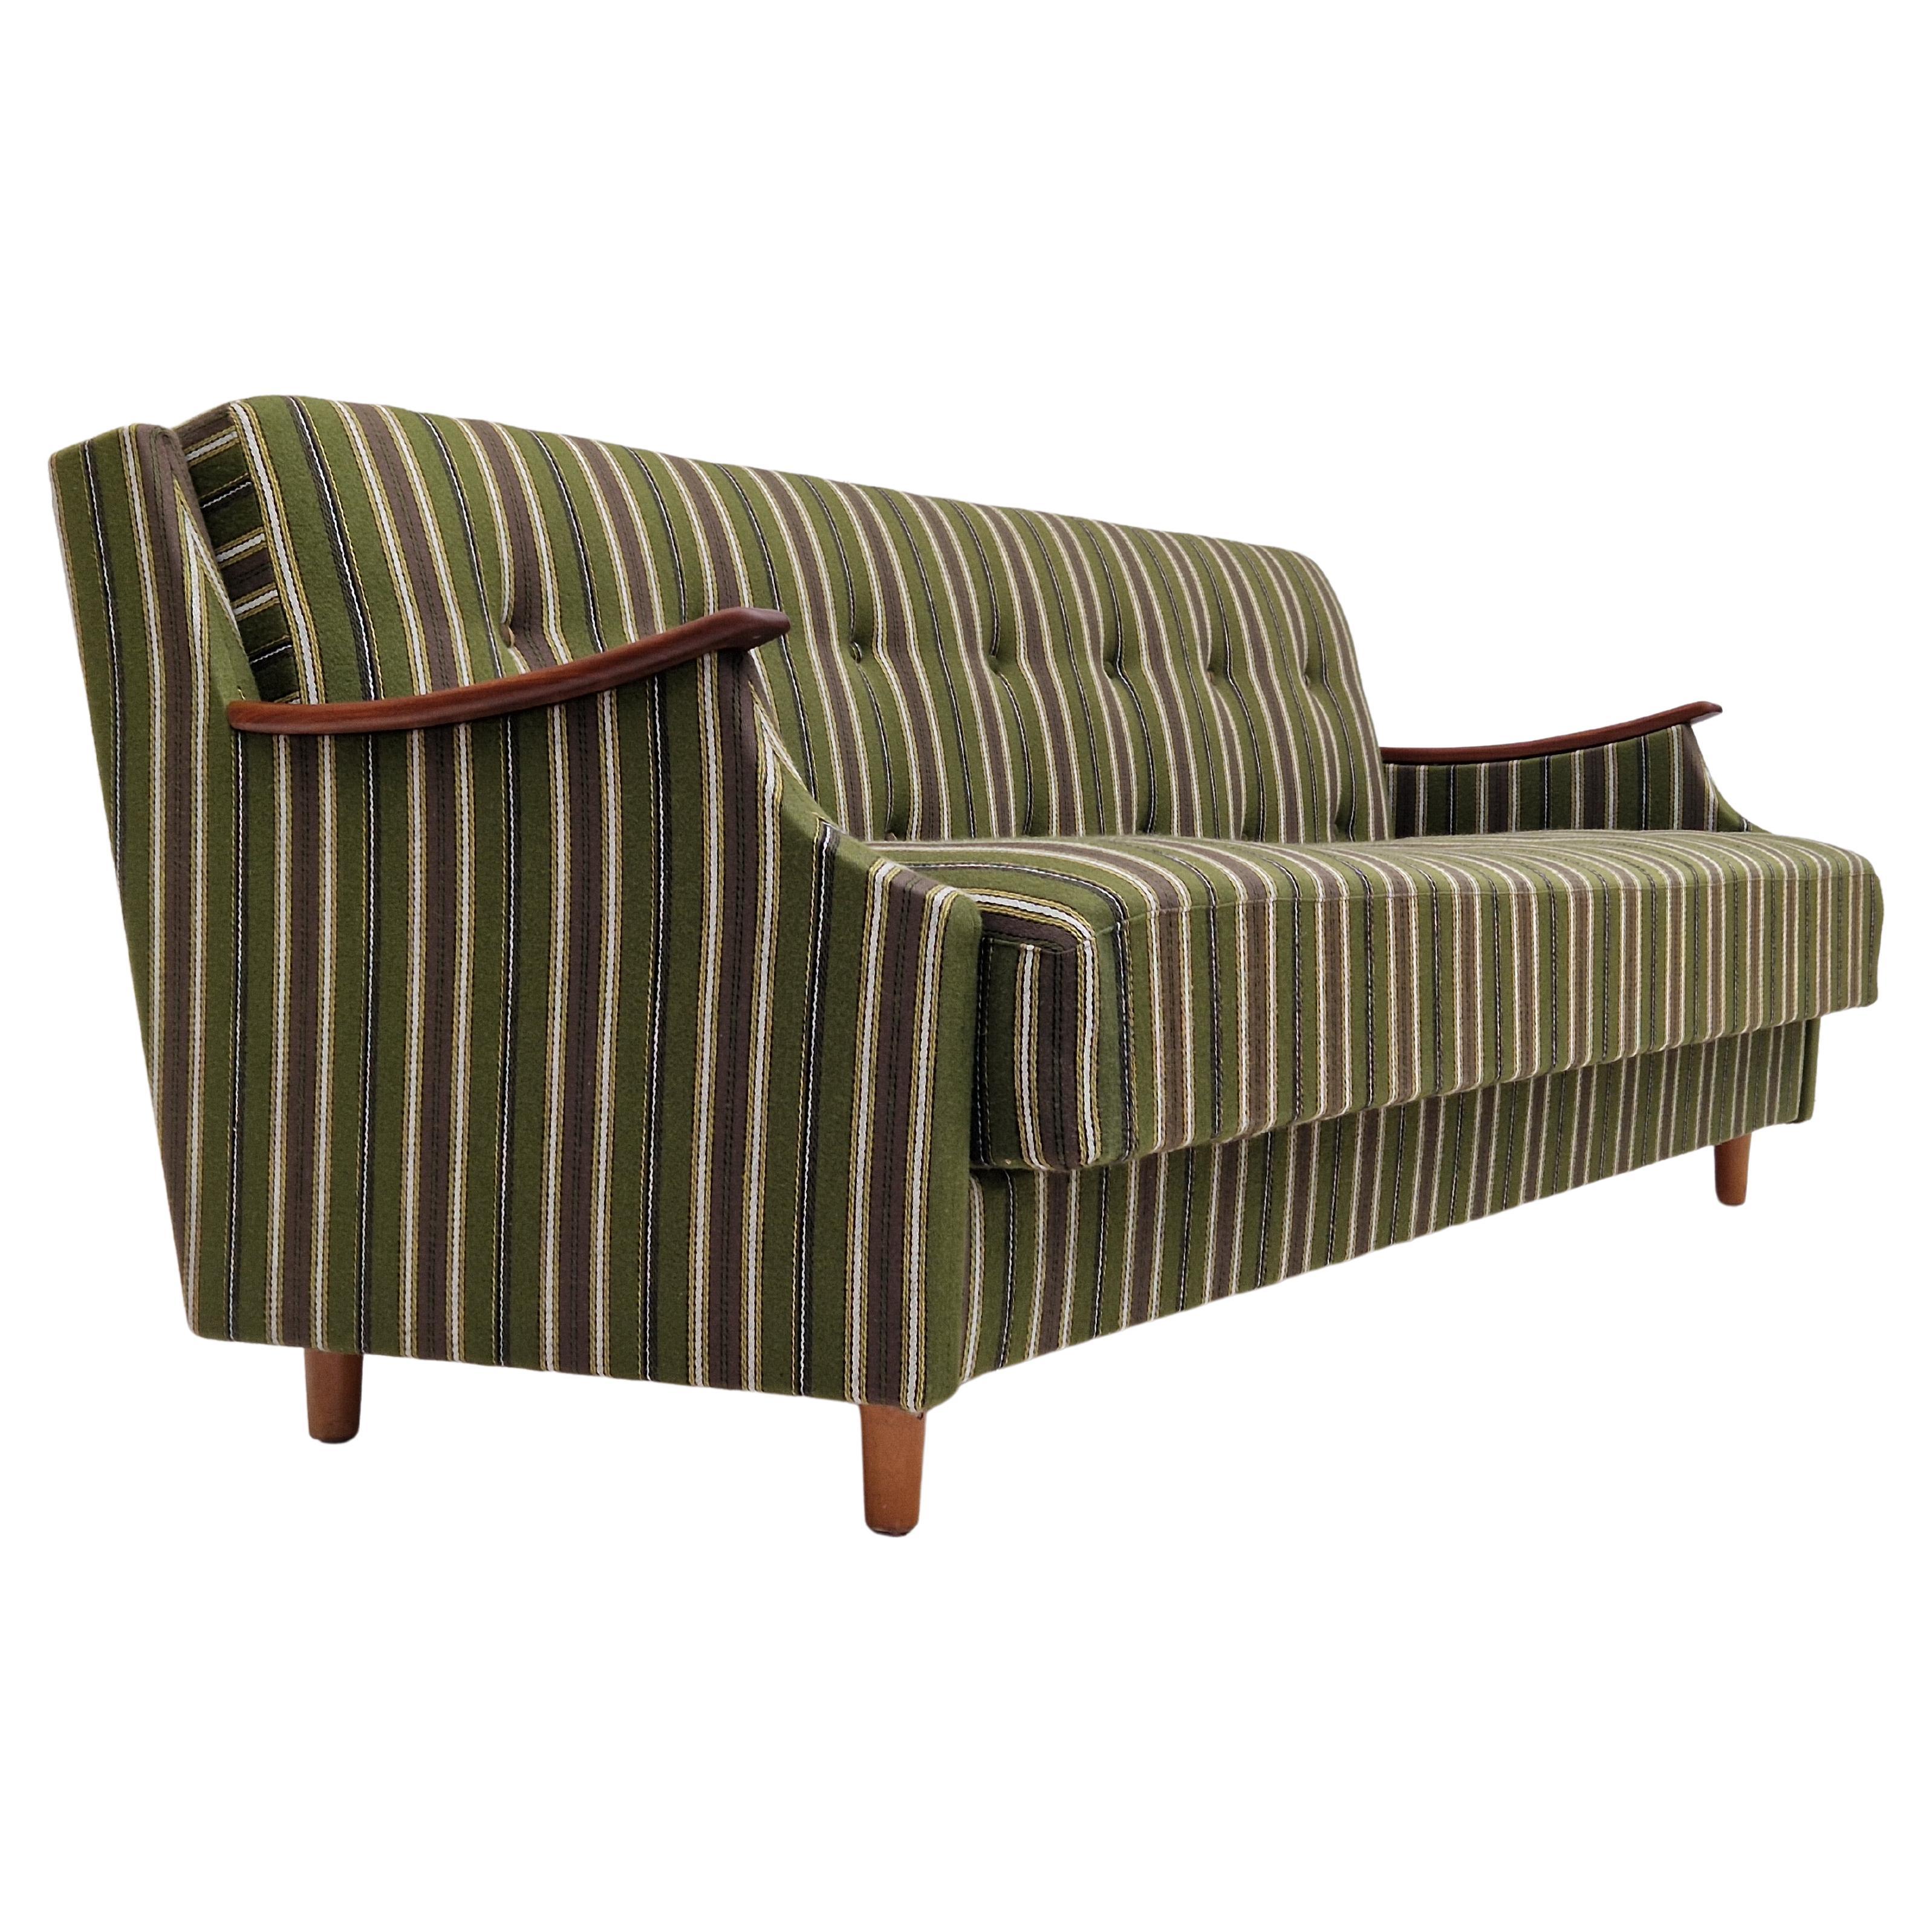 1960s, Danish 3 Seater Folded Sleeping Sofa, Original Very Good Condition For Sale